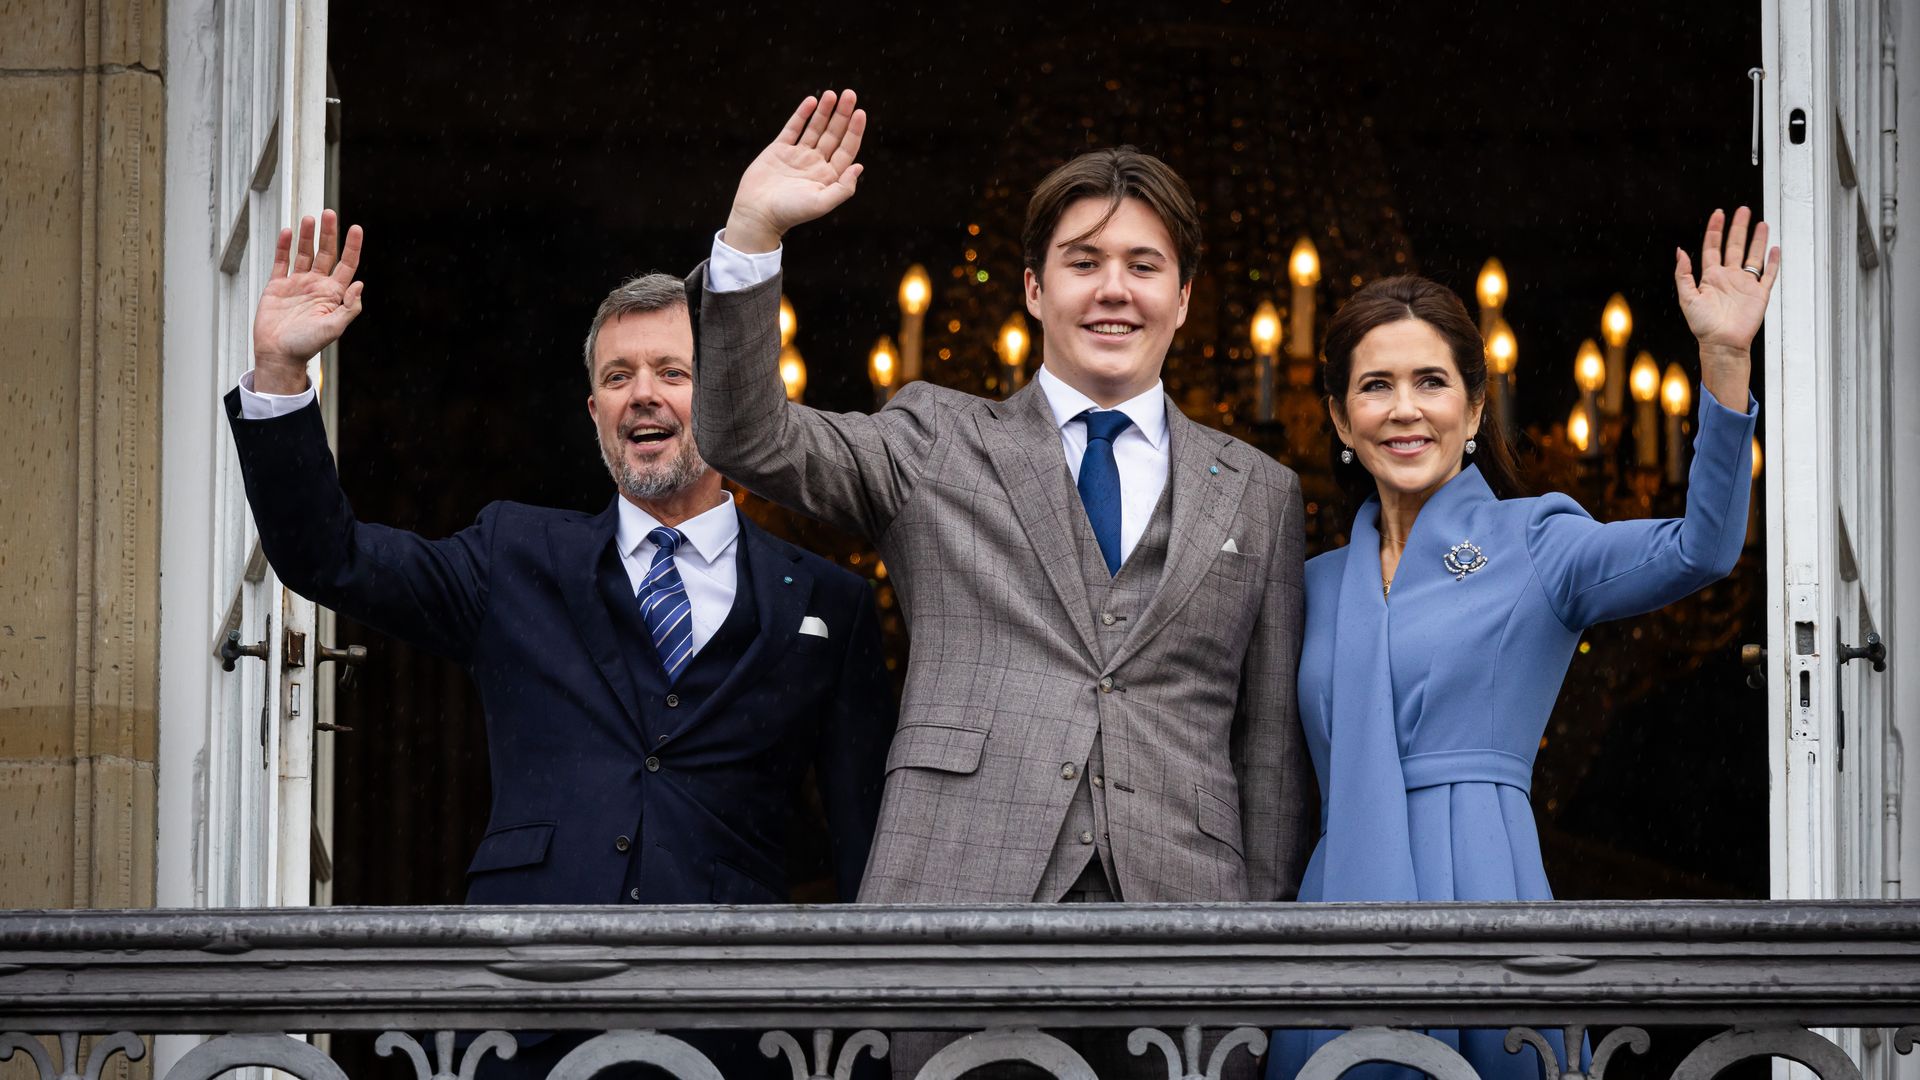 Crown Prince Frederik and Crown Princess Mary with Prince Christian on balcony